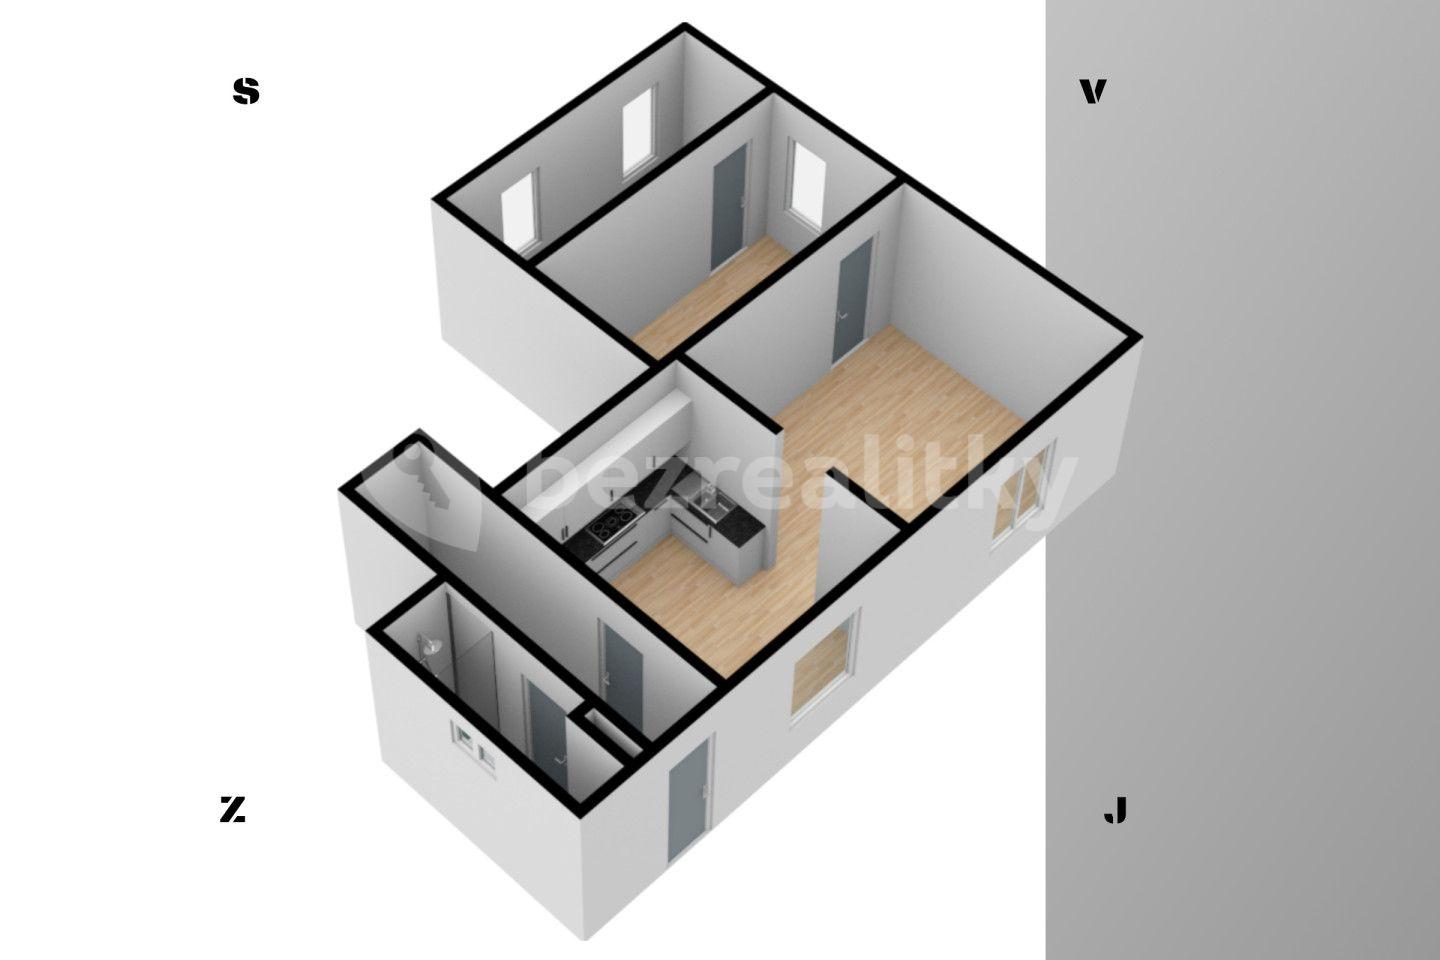 2 bedroom flat for sale, 53 m², Hradištní, Karlovy Vary, Karlovarský Region